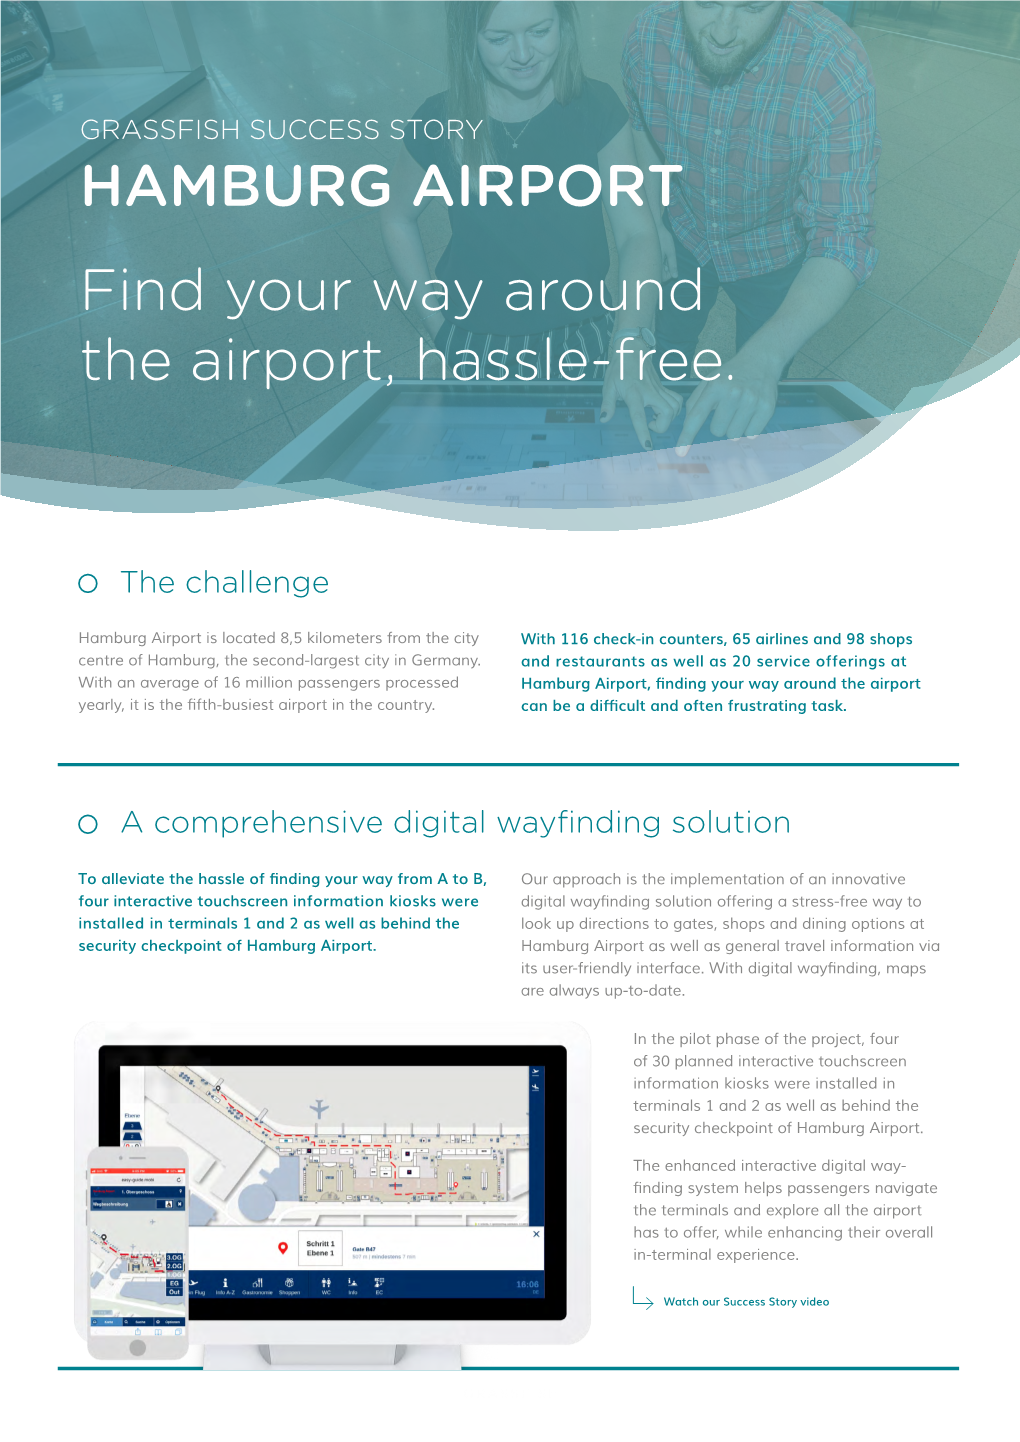 HAMBURG AIRPORT Find Your Way Around the Airport, Hassle-Free